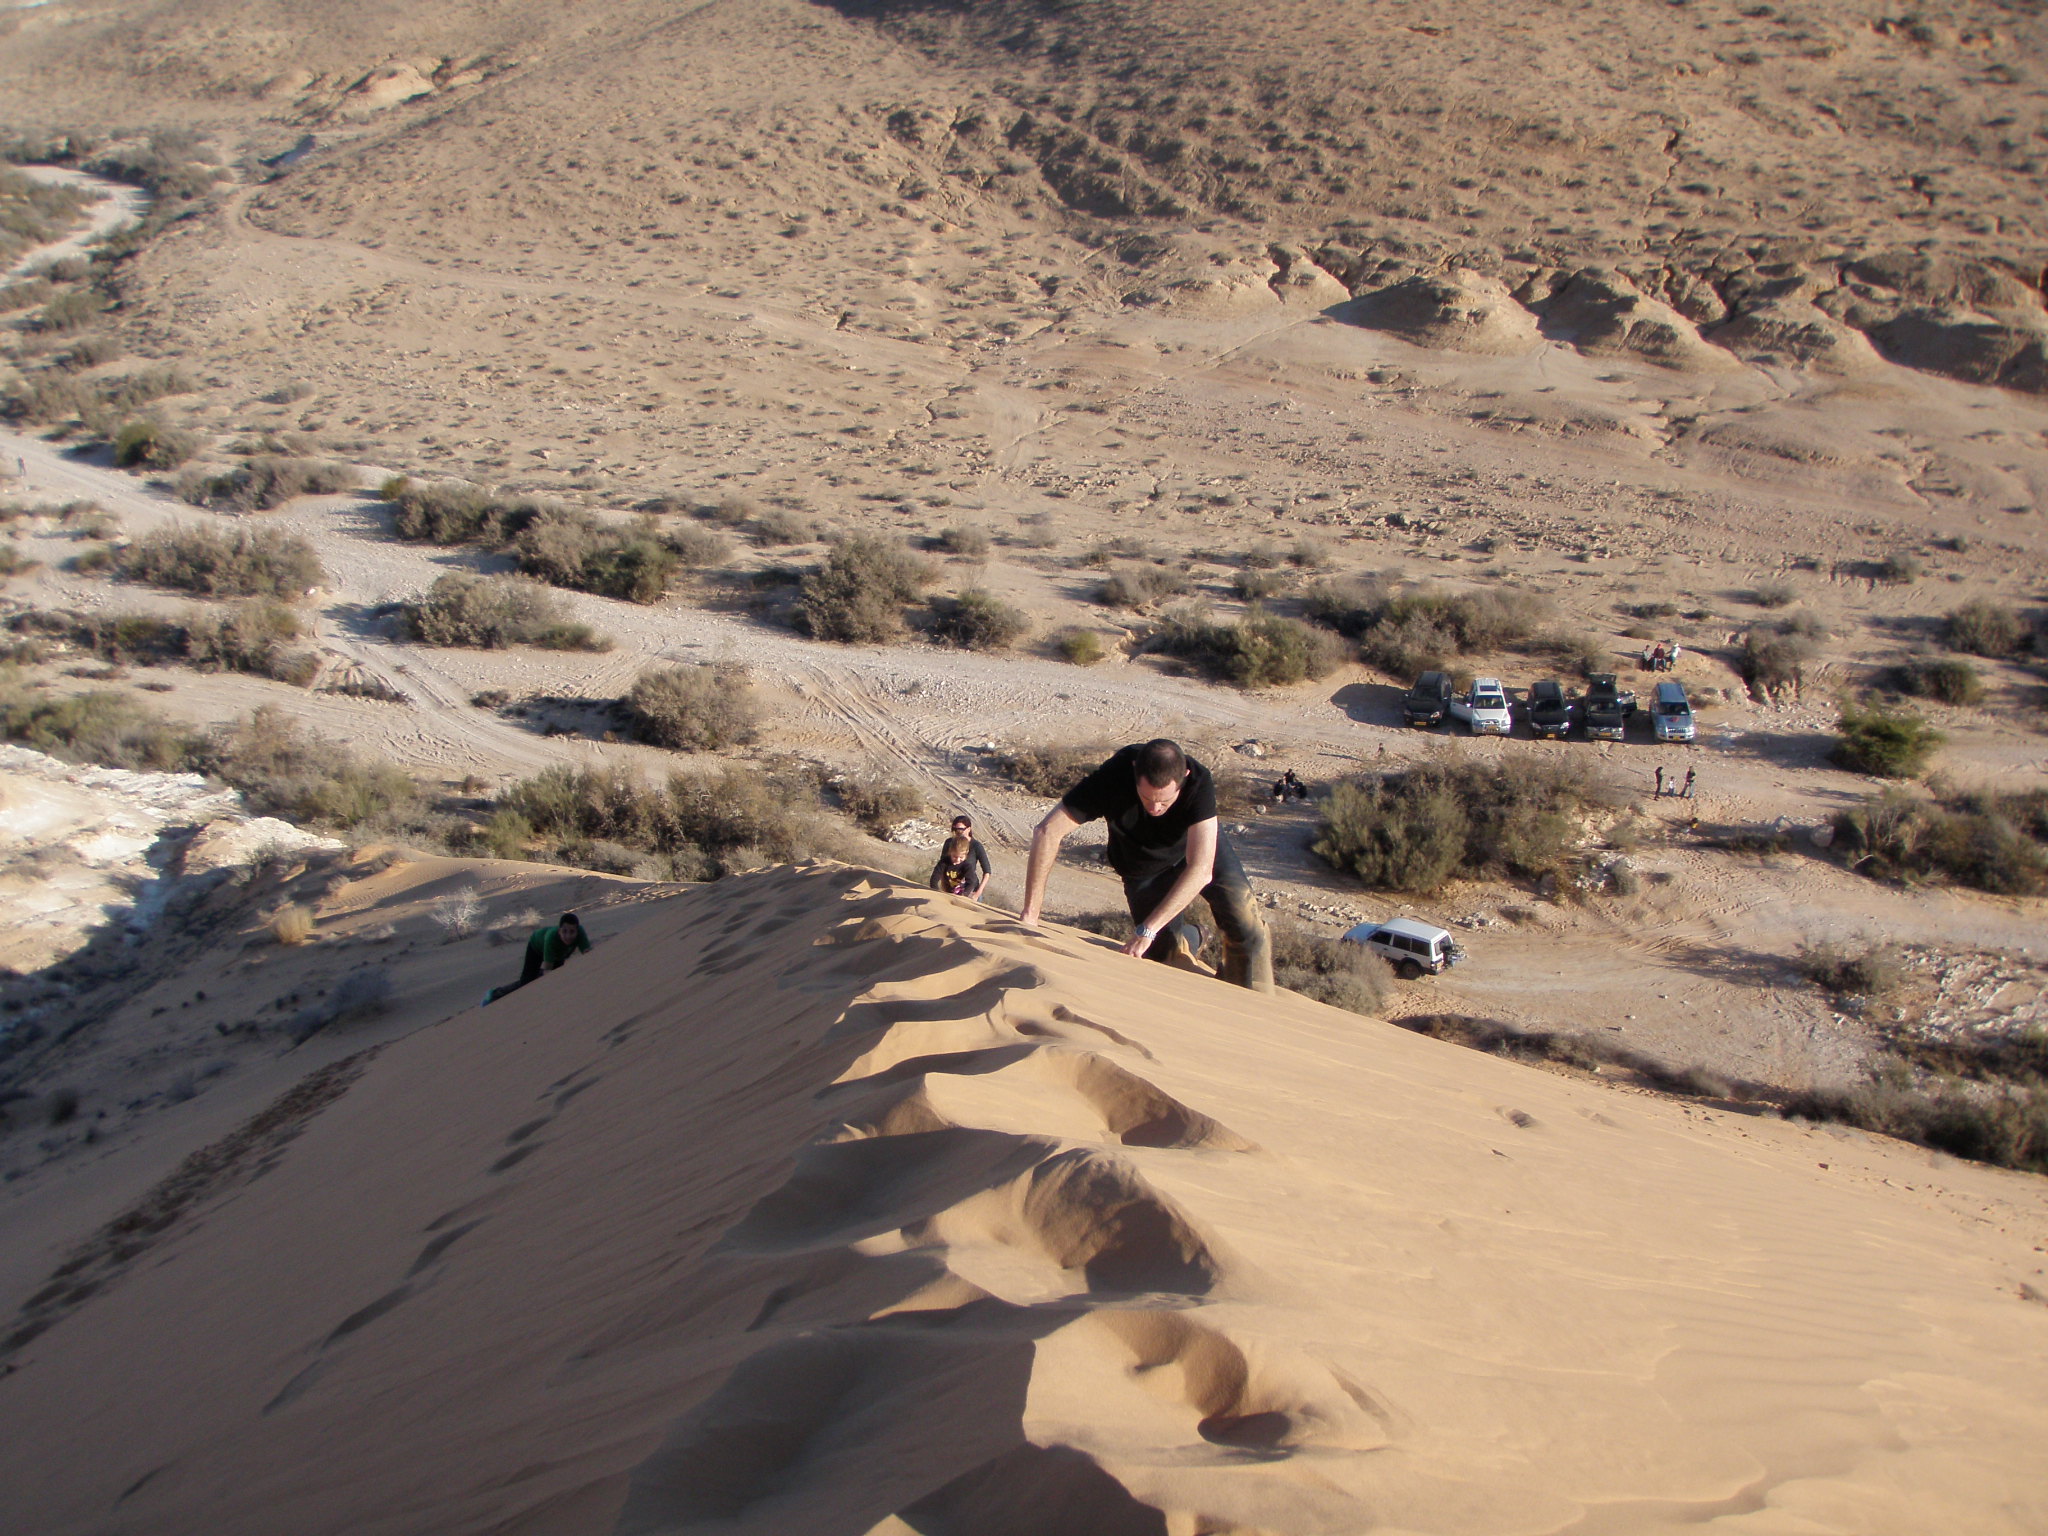 Halutza-Agur-Shunra Negev dune Adventure 4x4 jeep tours